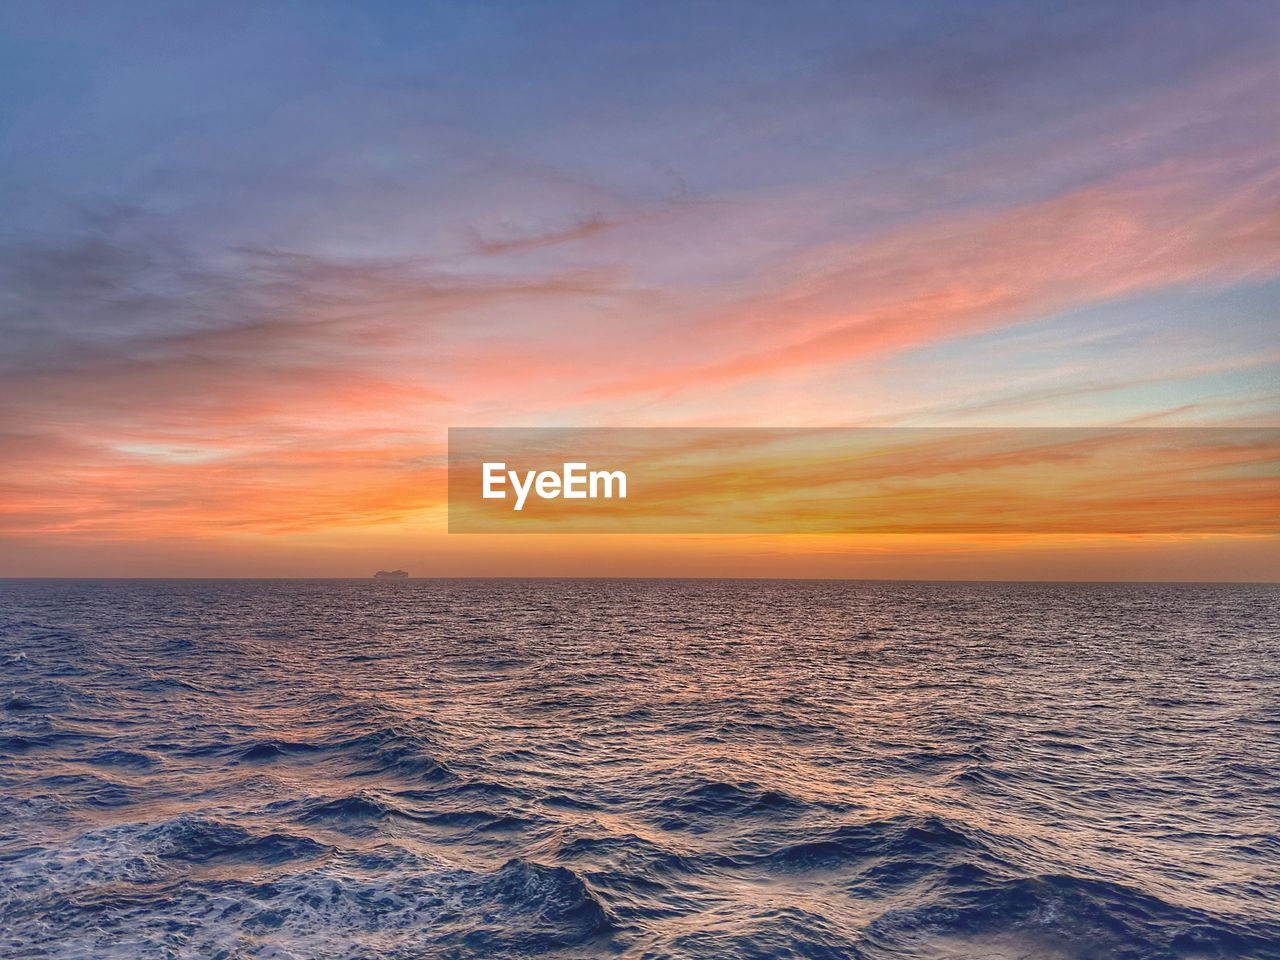 scenic view of sea against orange sky